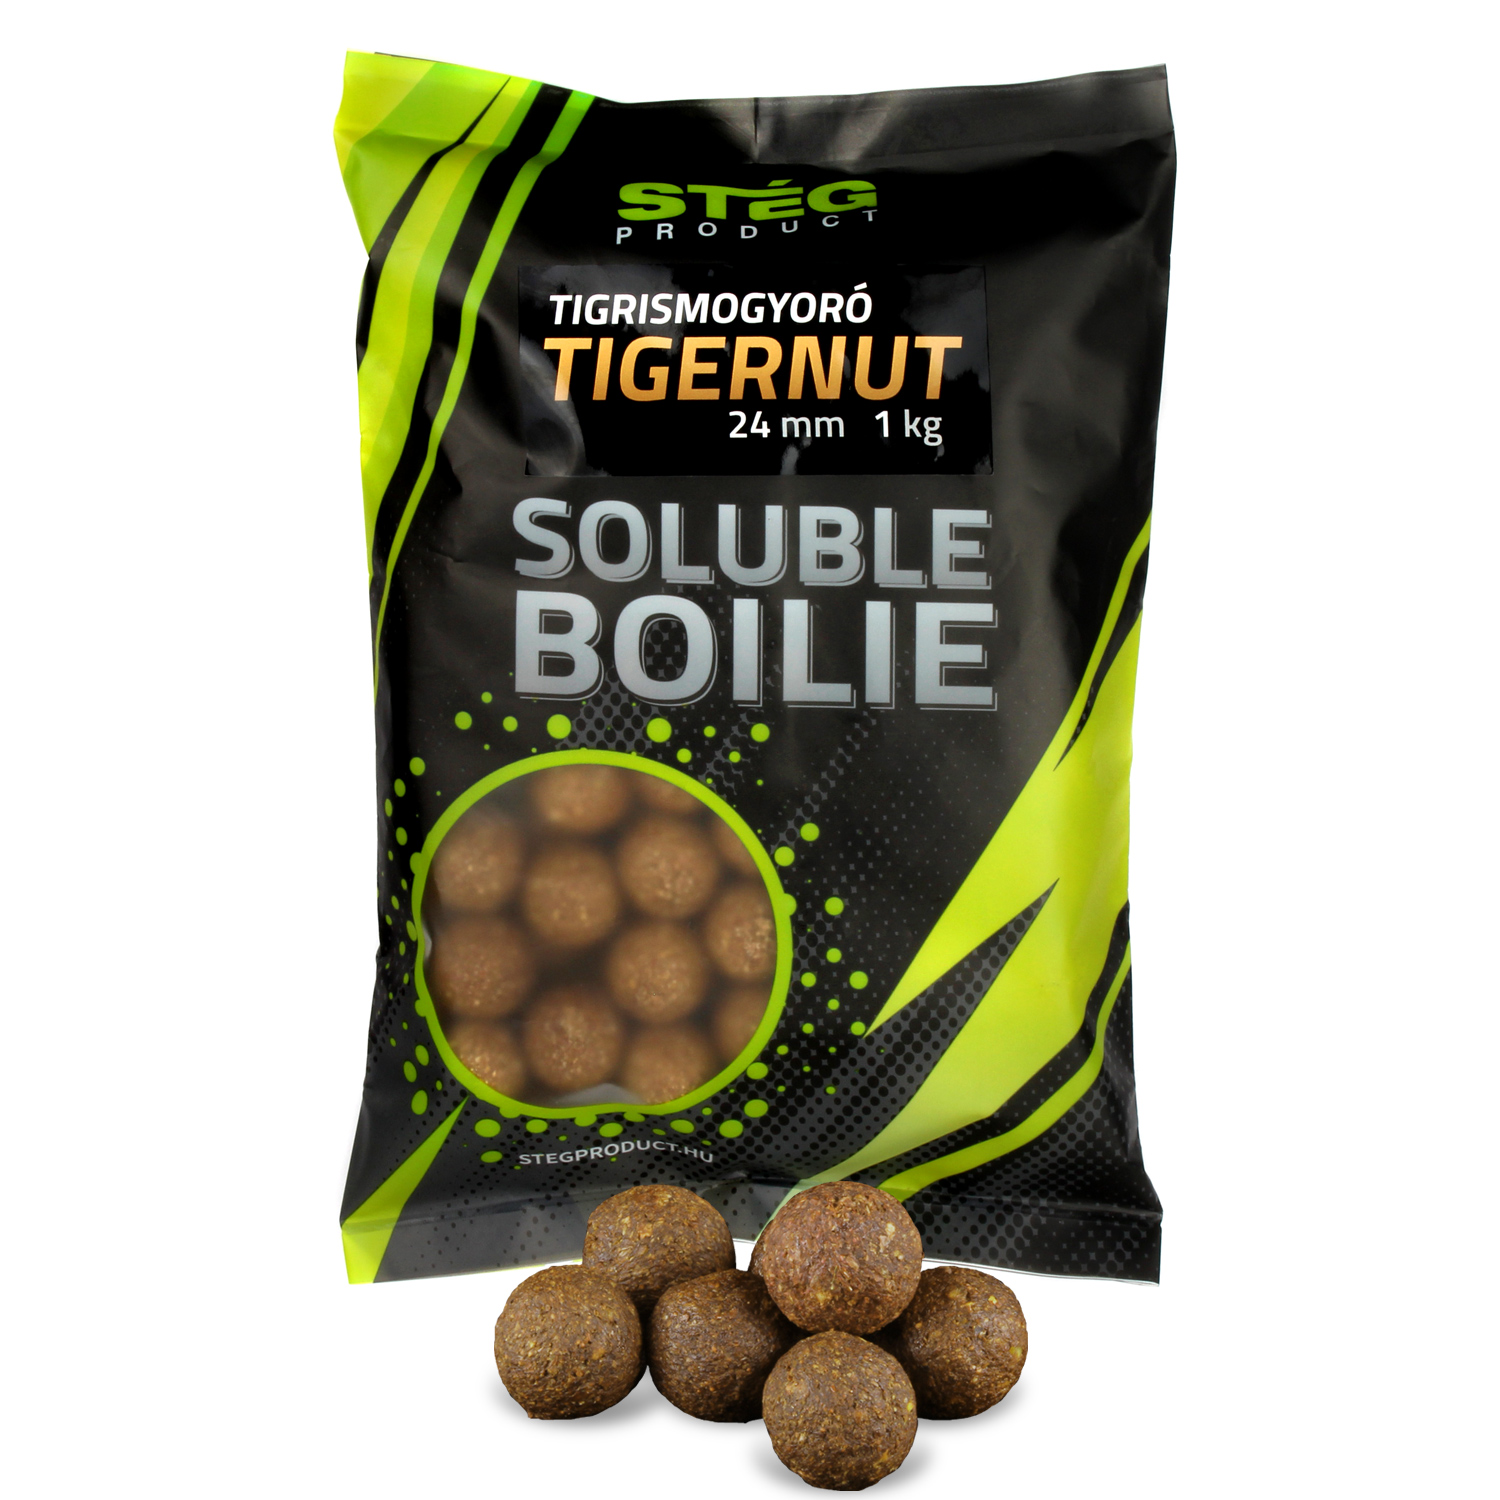 Stg Product Soluble Boilie 24mm Tigernut 1kg